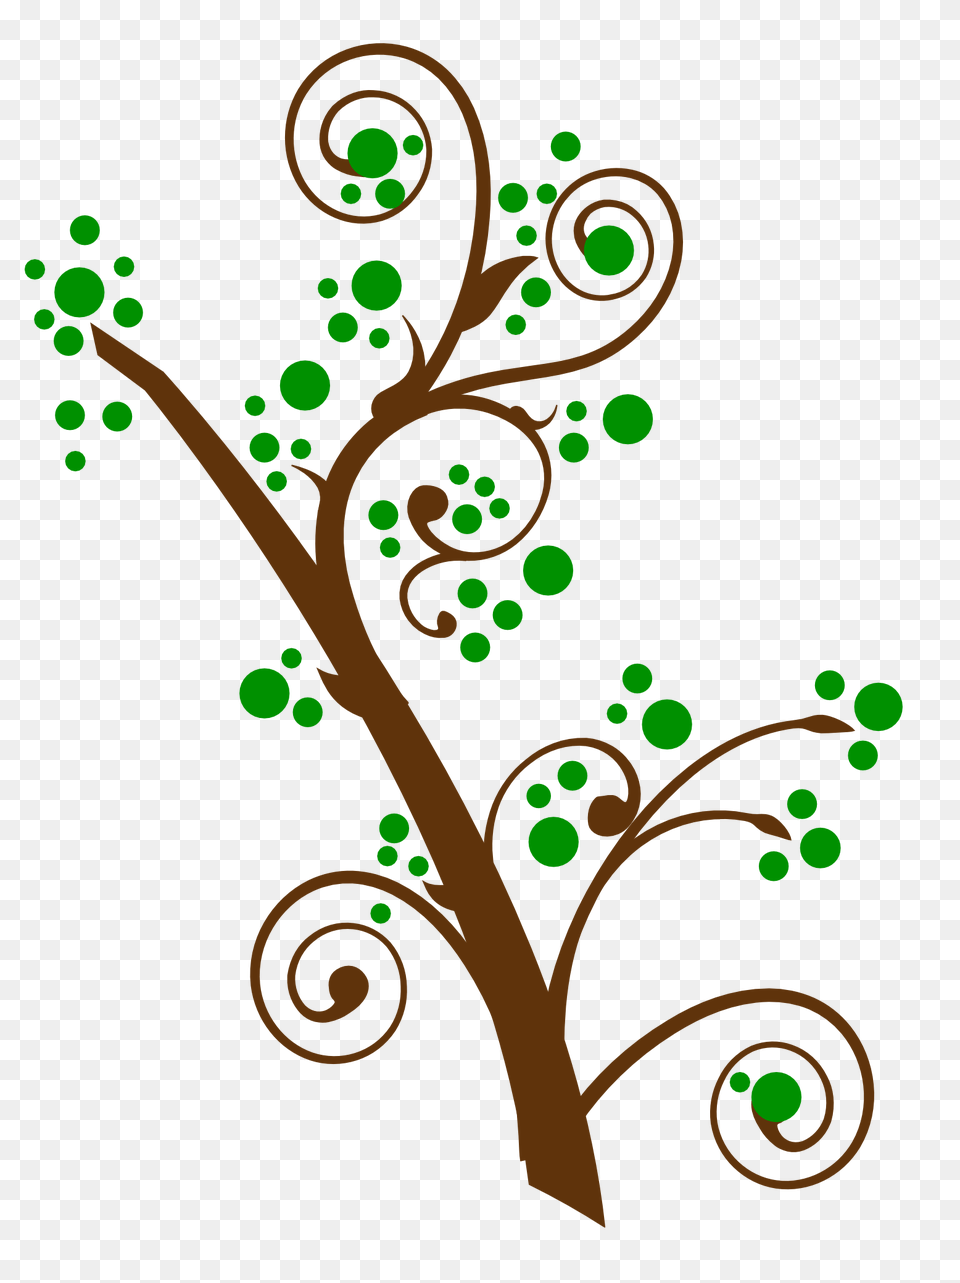 Pngpix Com Swirl Tree Image, Art, Floral Design, Graphics, Pattern Free Transparent Png